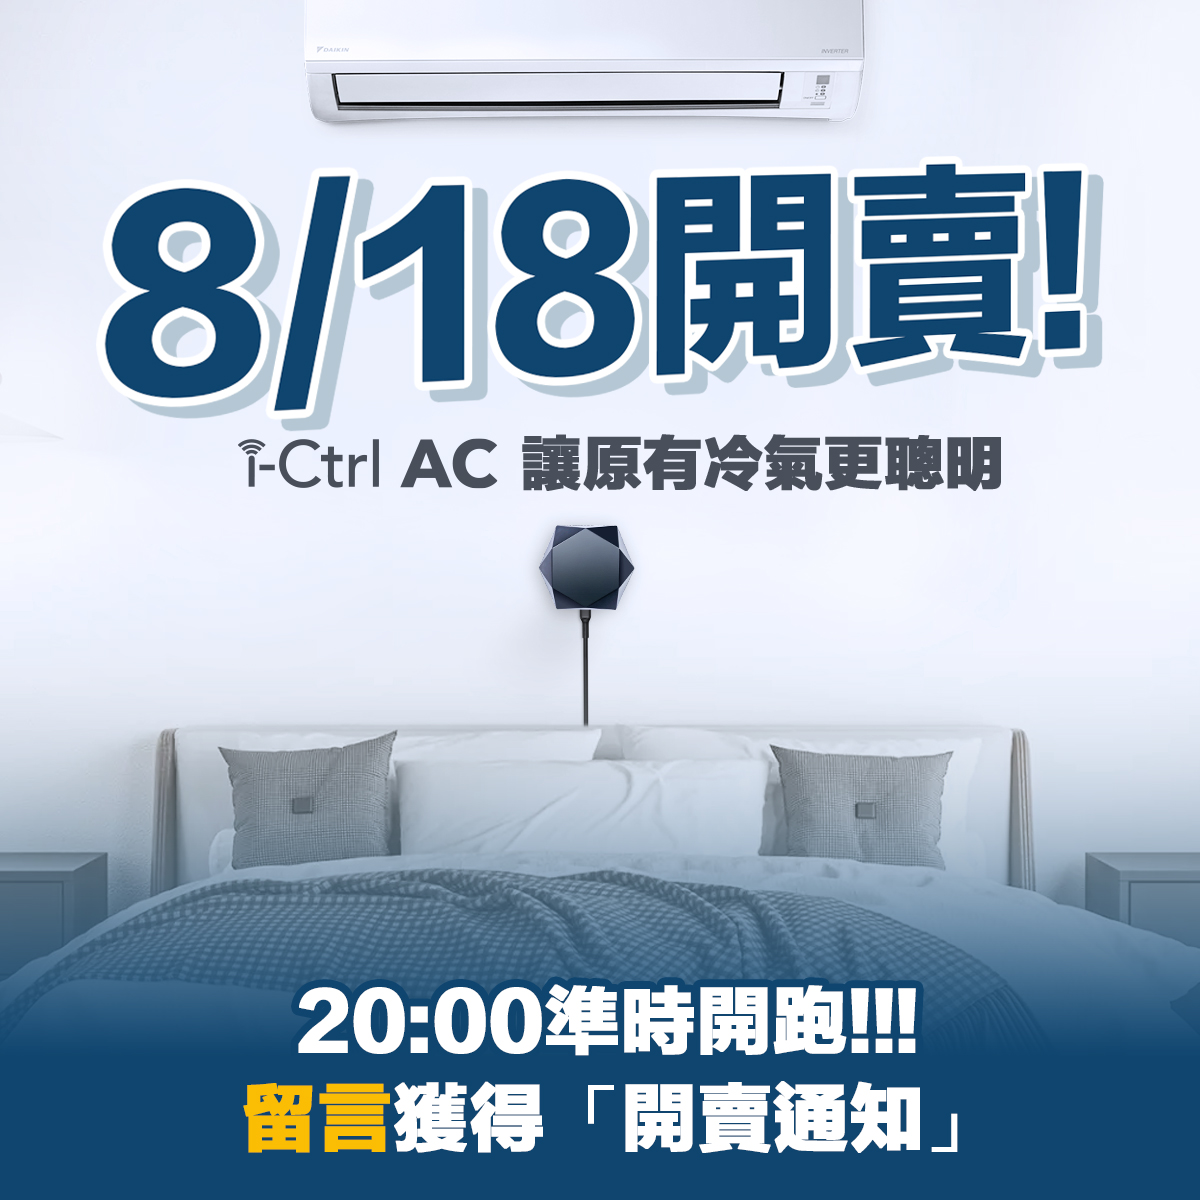 AIFA i-Ctrl AC開賣蓋大樓貼文v1